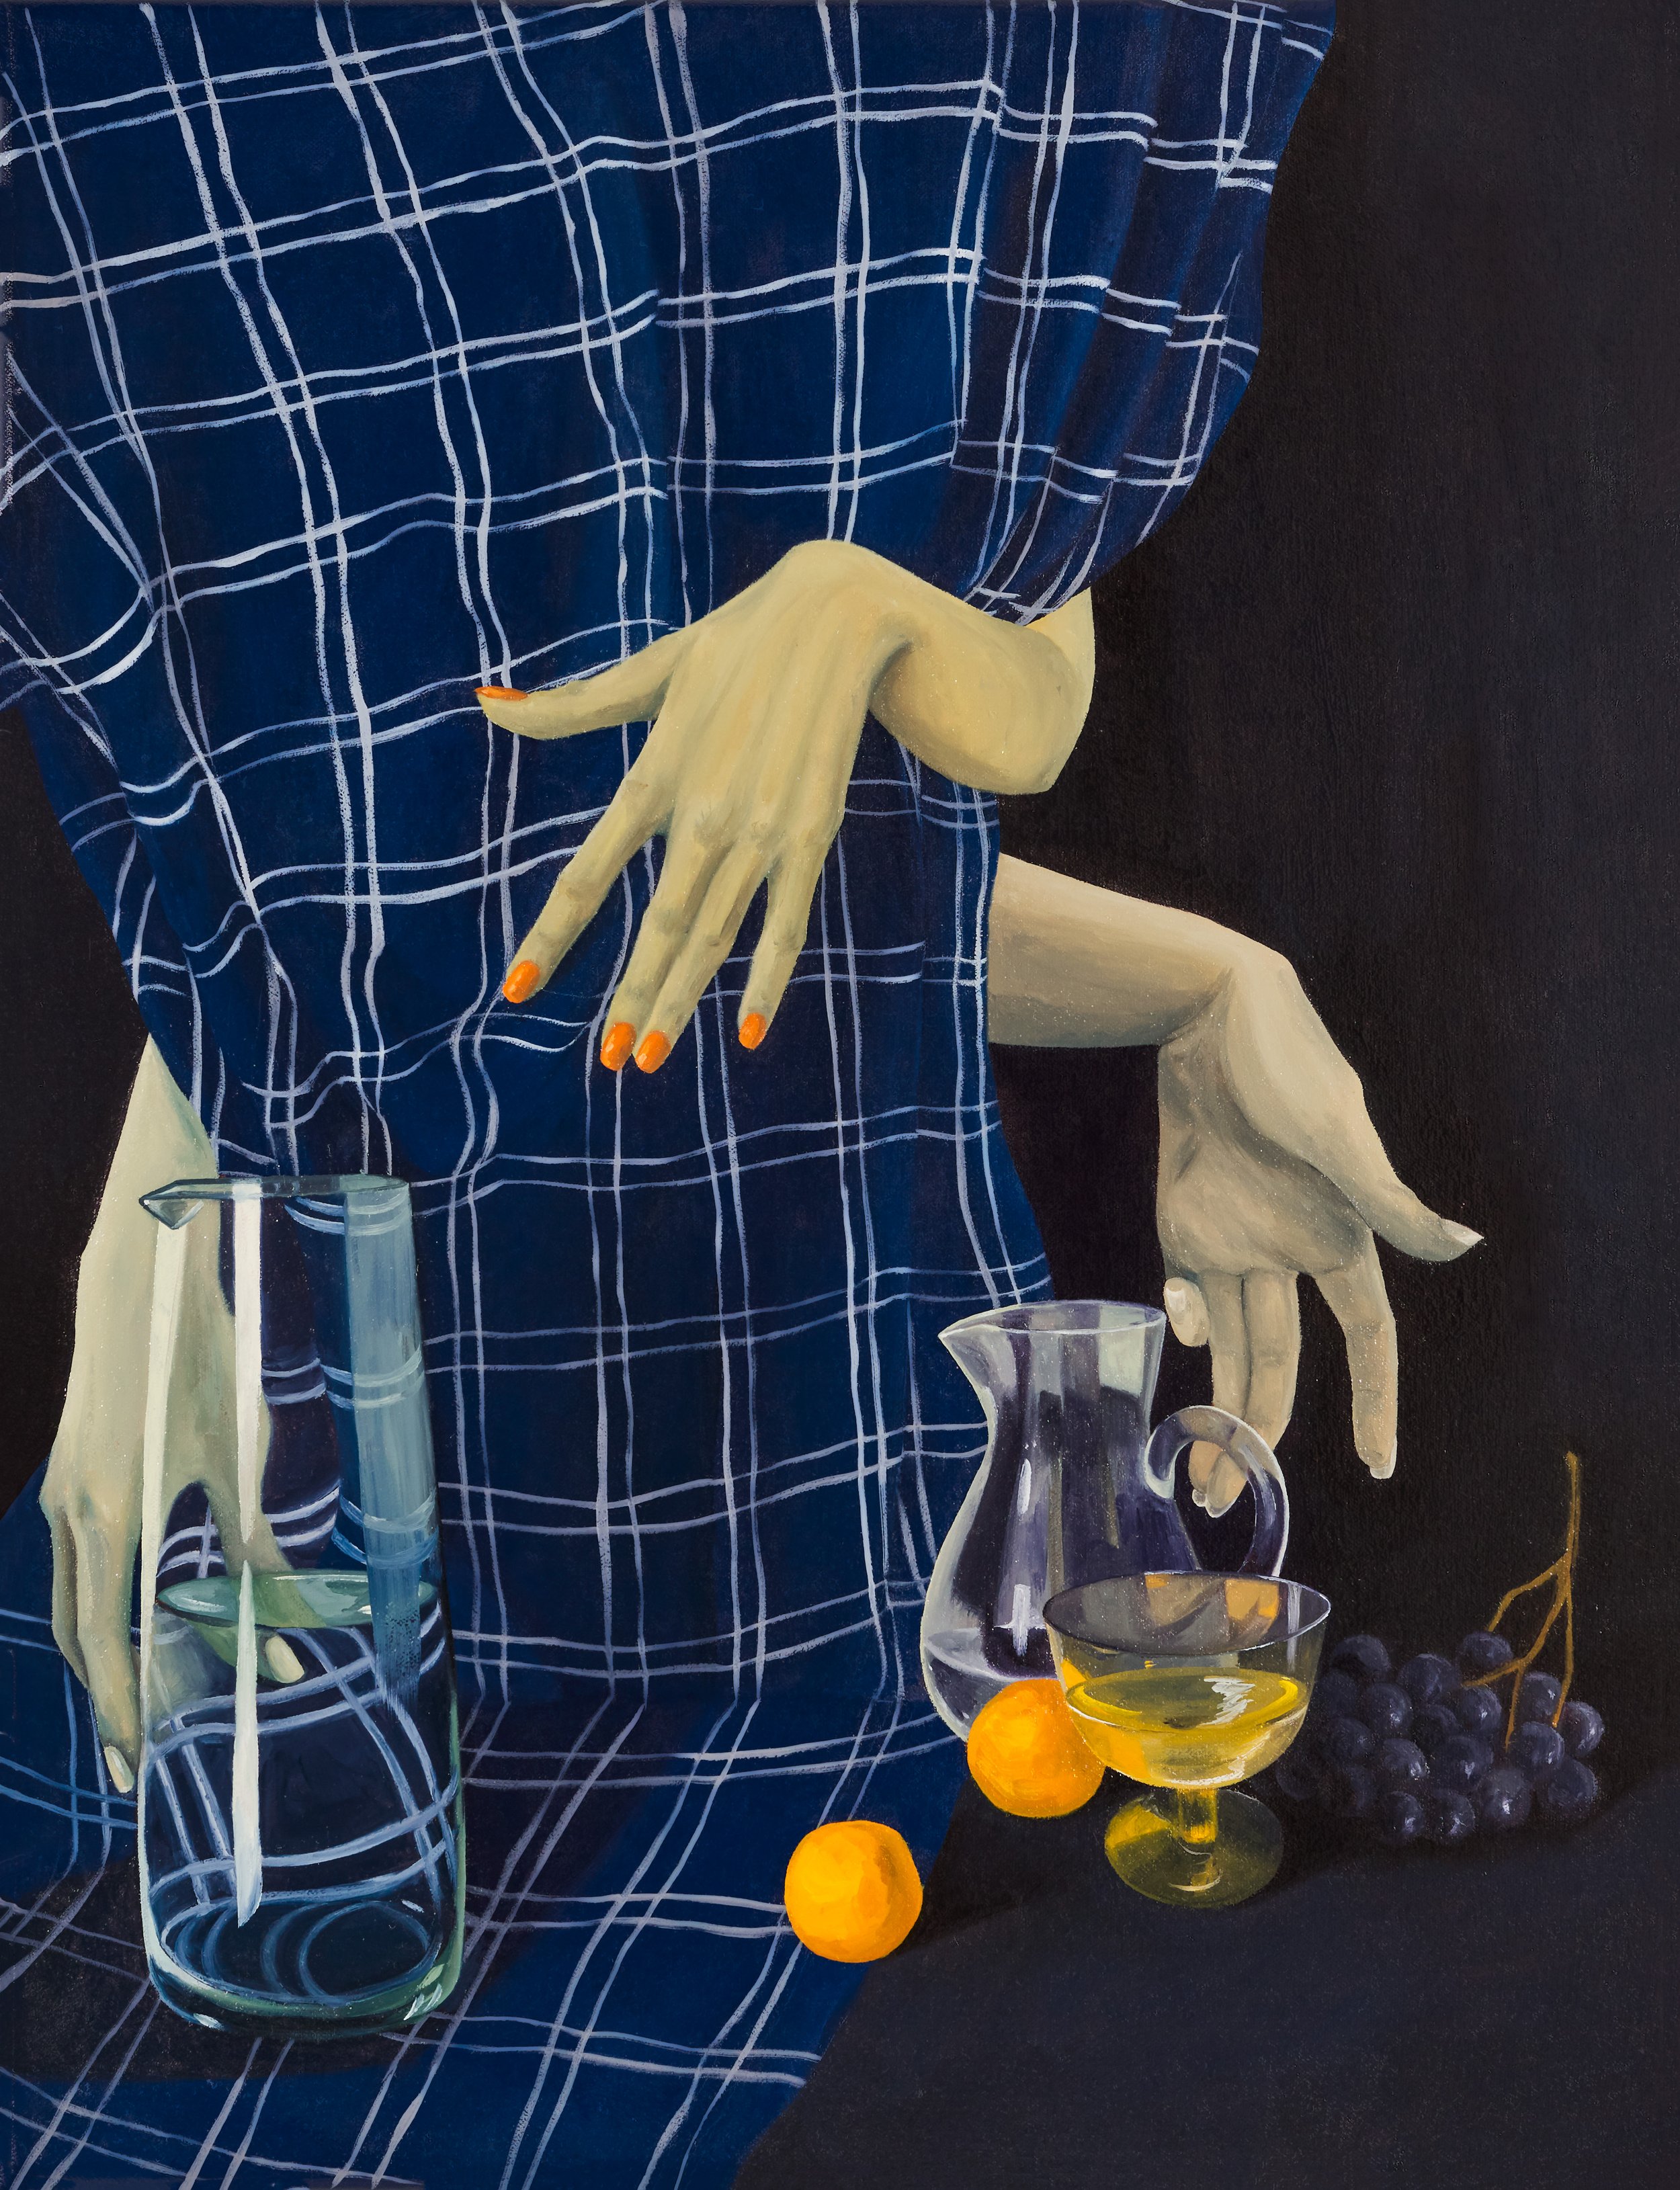  Plaid cloth, fruit and Nanna's glassware, 2020  oil on canvas  60.5x46.8 cm 